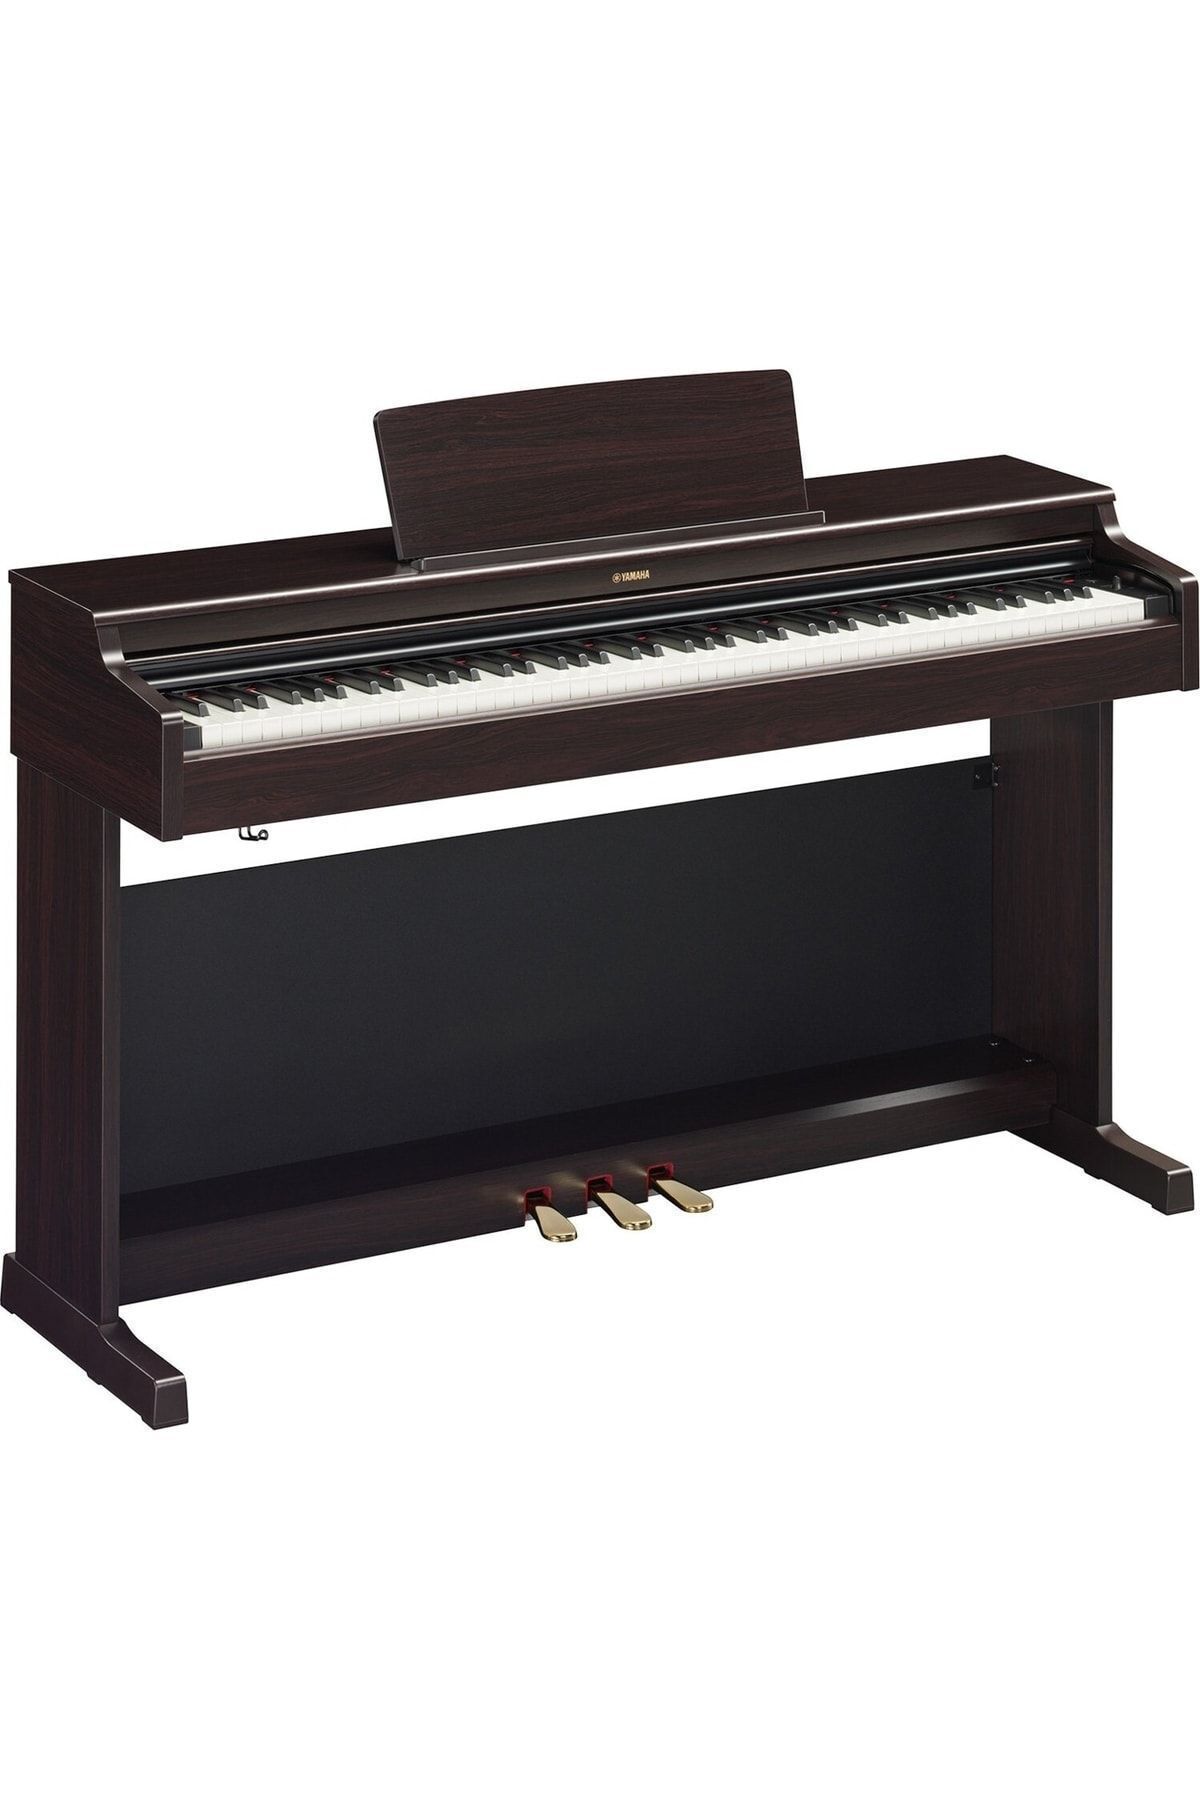 Yamaha Ydp165r Gül Ağacı Dijital Piyano